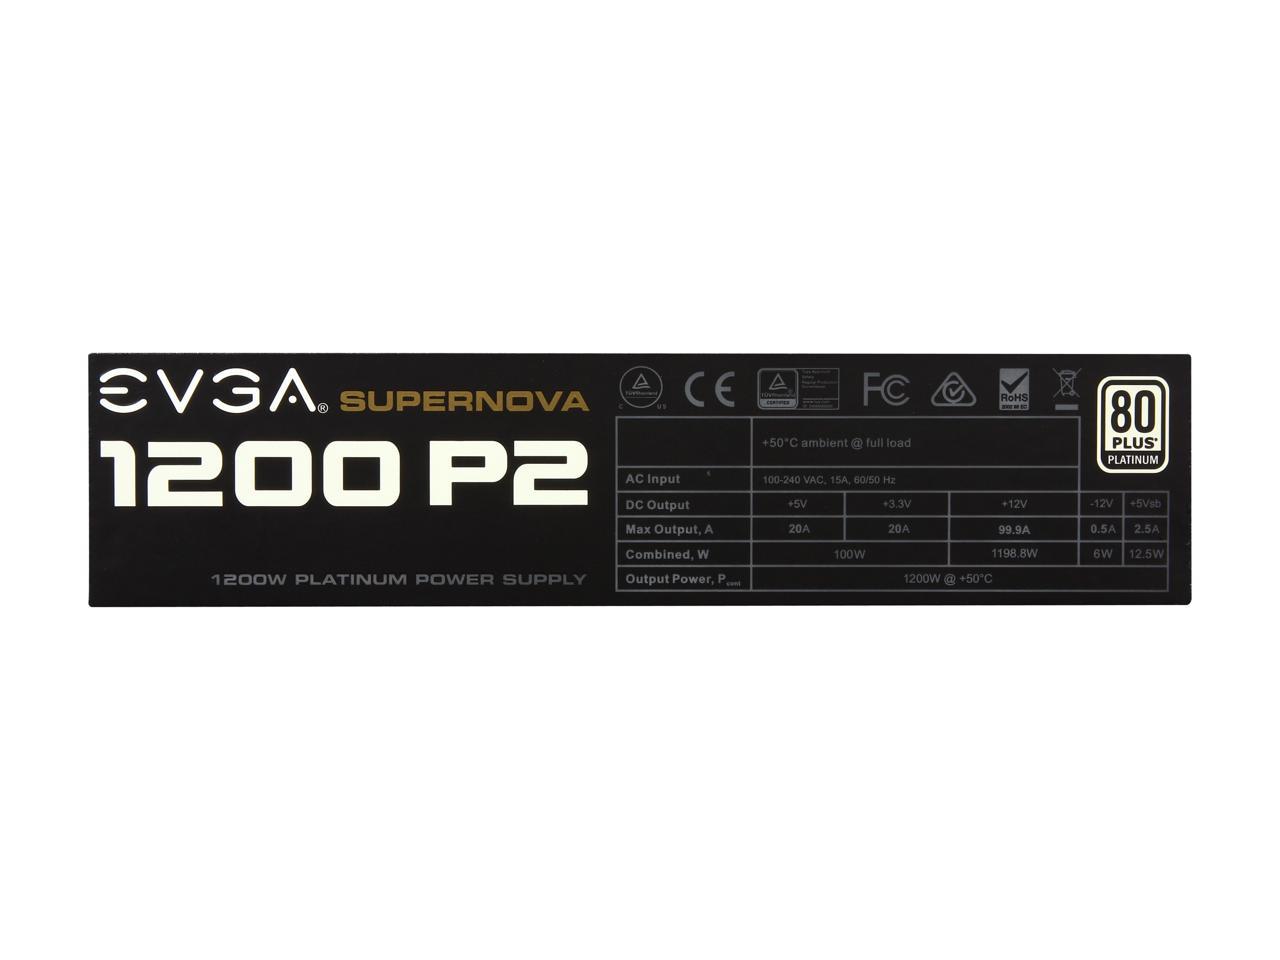 EVGA SuperNOVA 1200 P2 220-P2-1200-X1 80+ PLATINUM 1200W Fully Modular EVGA ECO Mode Includes FREE Power On Self Tester Power Supply